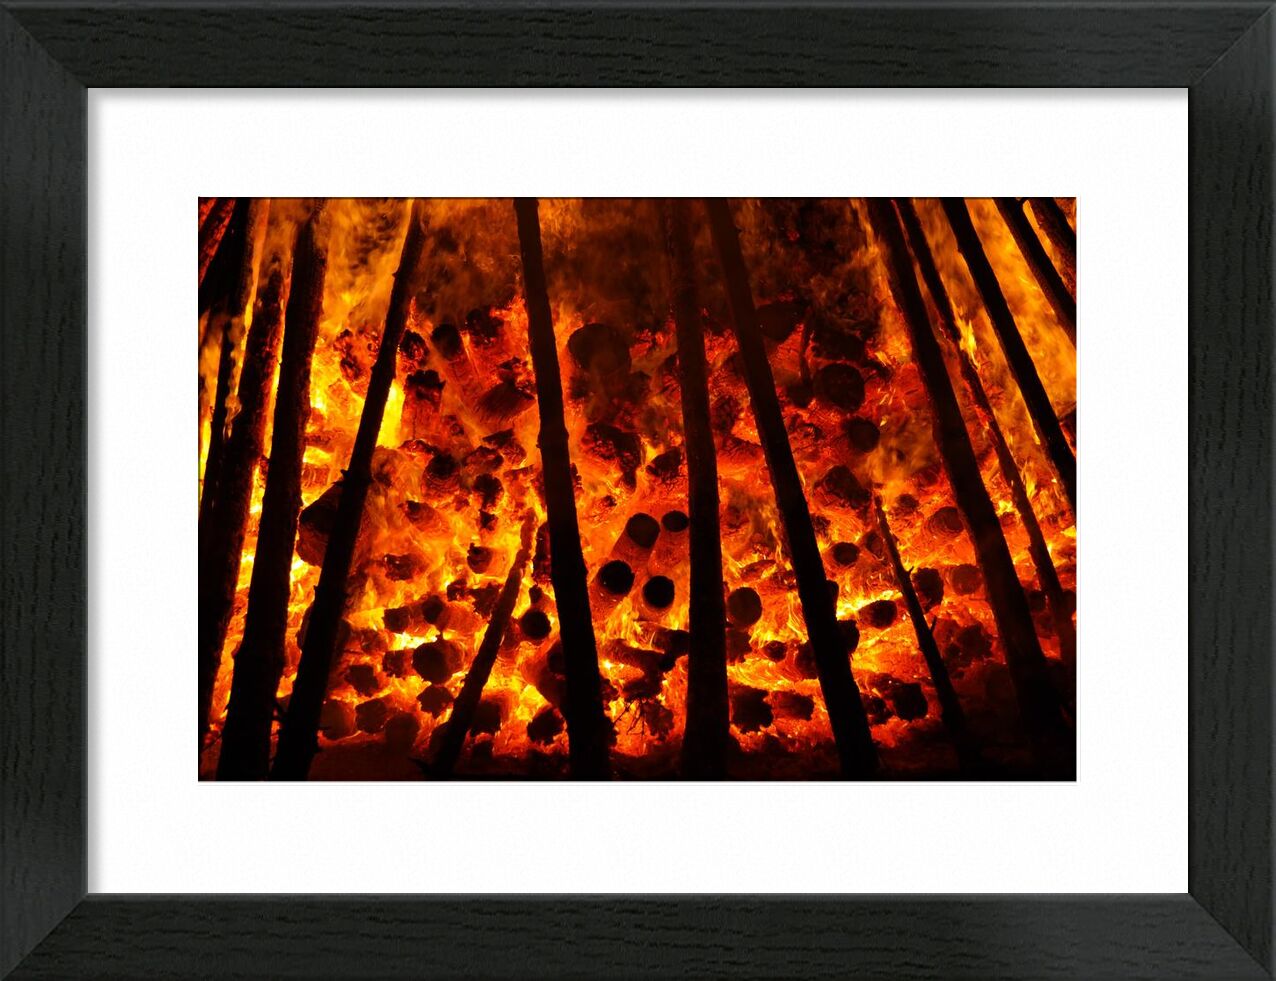 Flame from Aliss ART, Prodi Art, heat, flame, fire, burning